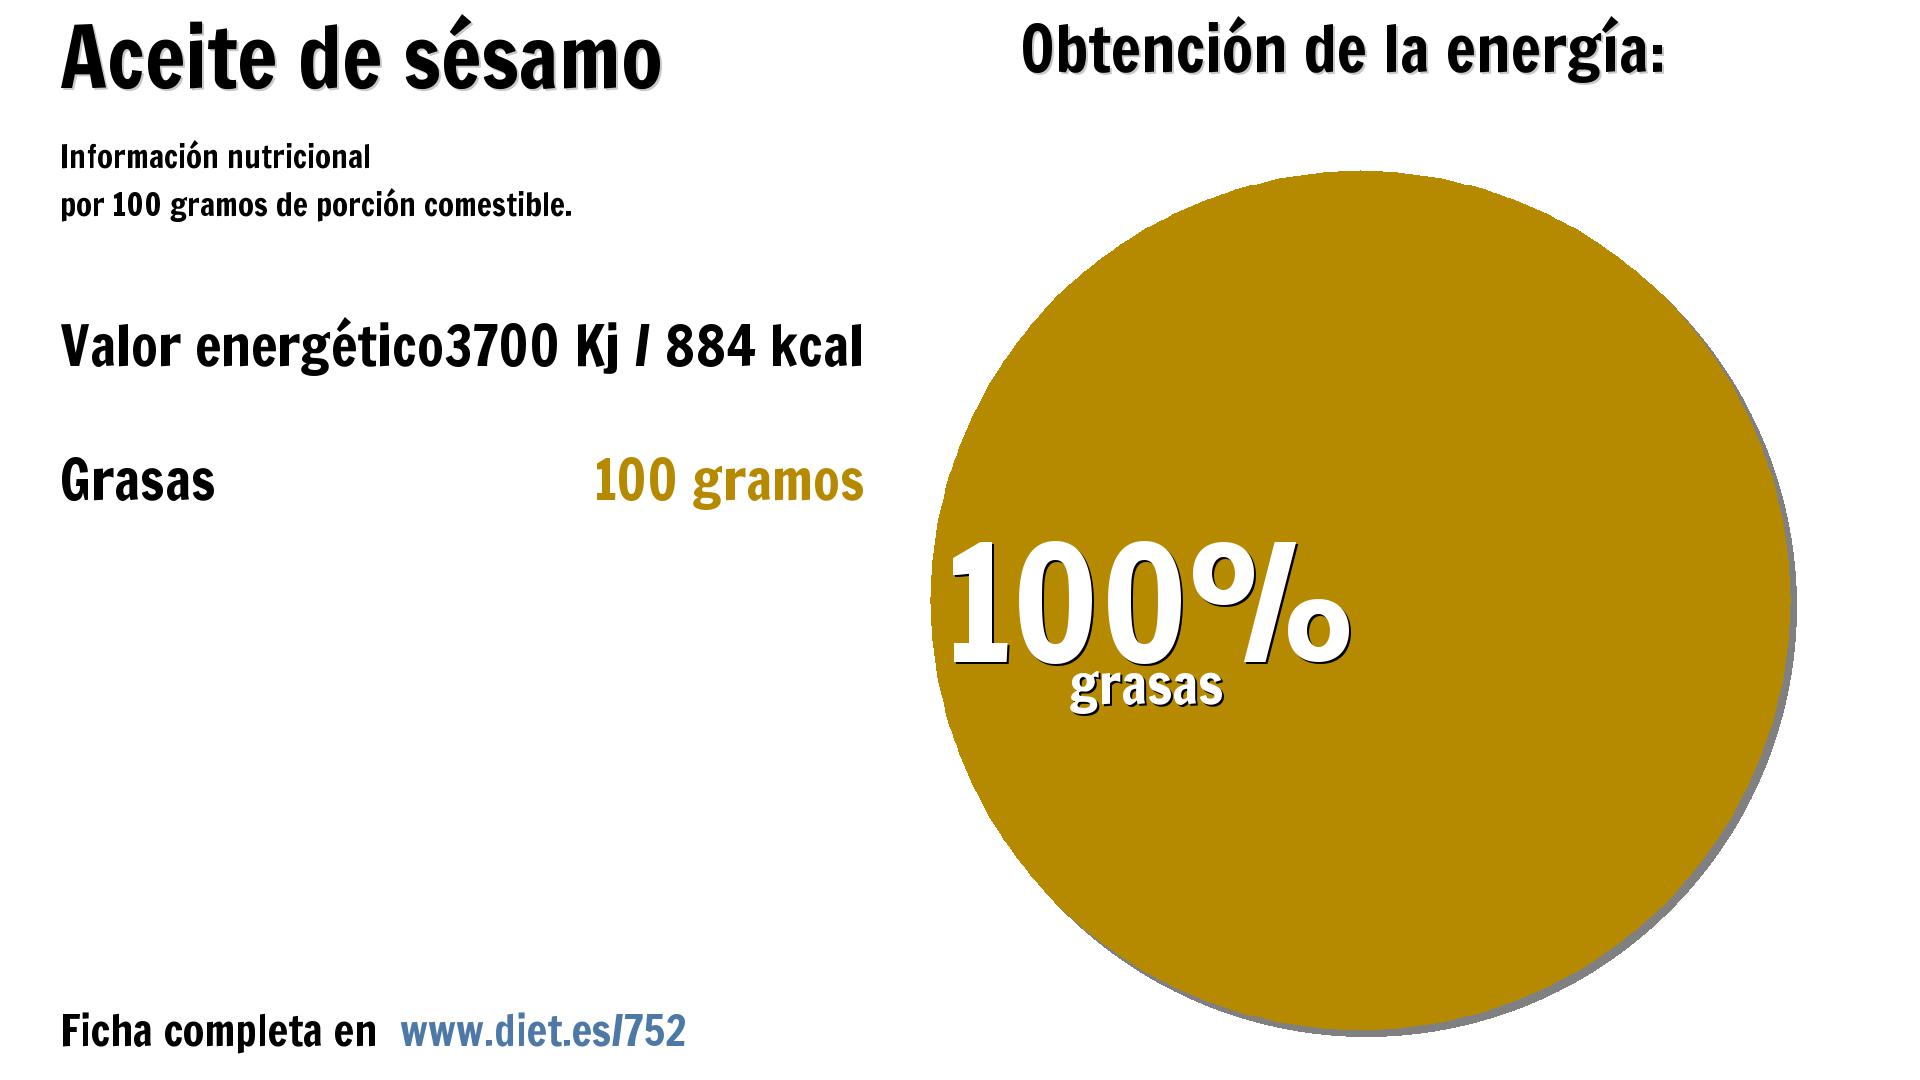 Aceite de sésamo: energía 3700 Kj y grasas 100 g.